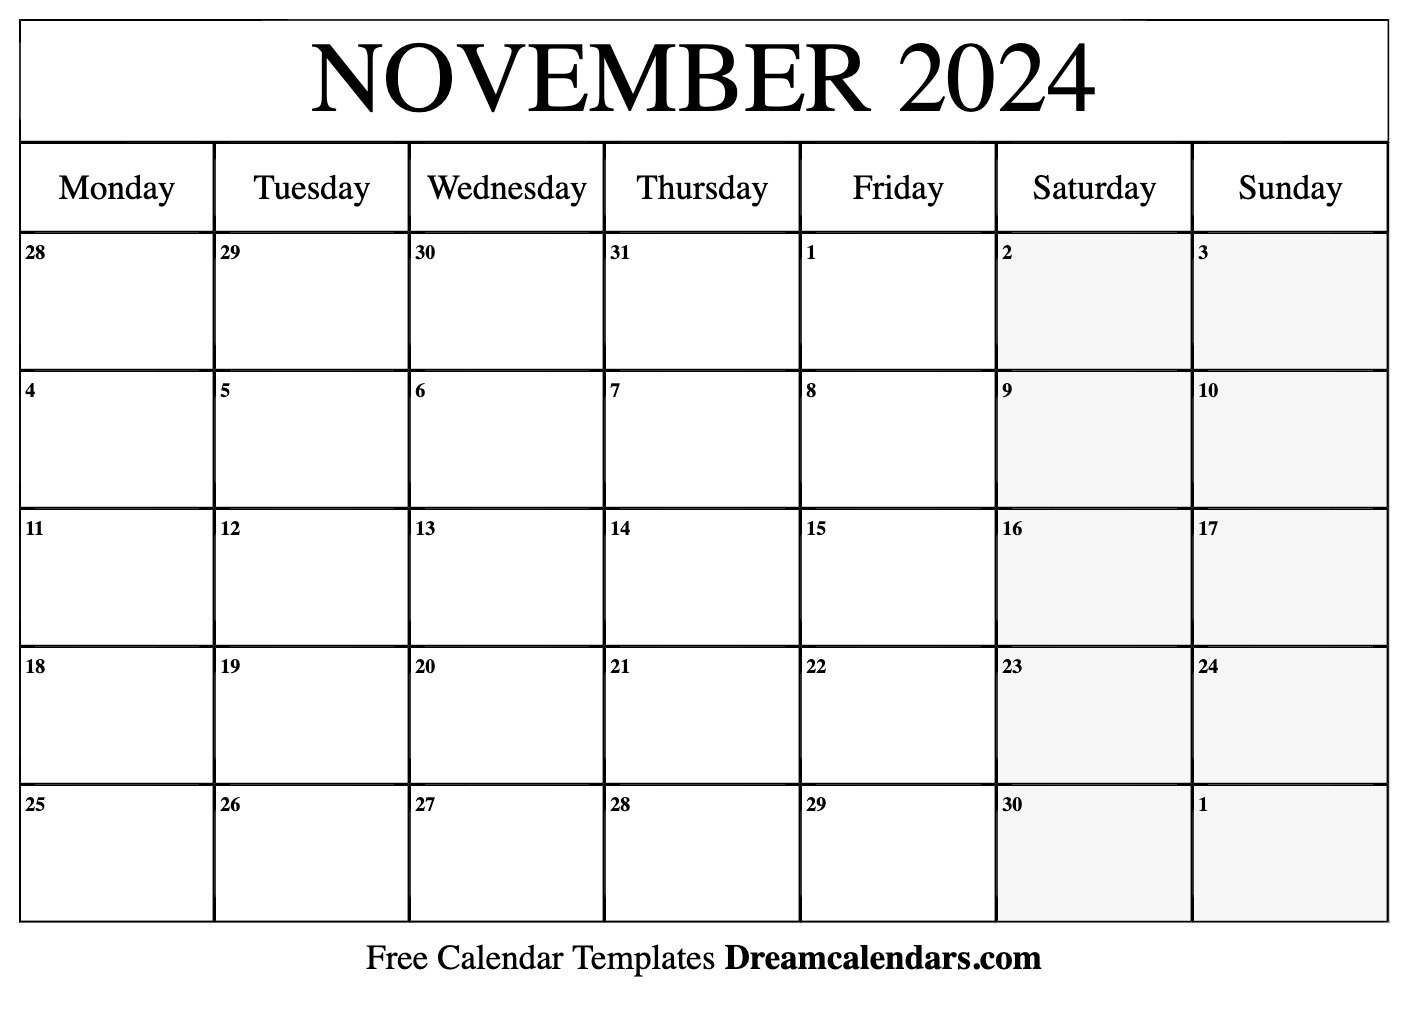 November 2024 Calendar | Free Blank Printable With Holidays for Free Printable Calendar November 2024